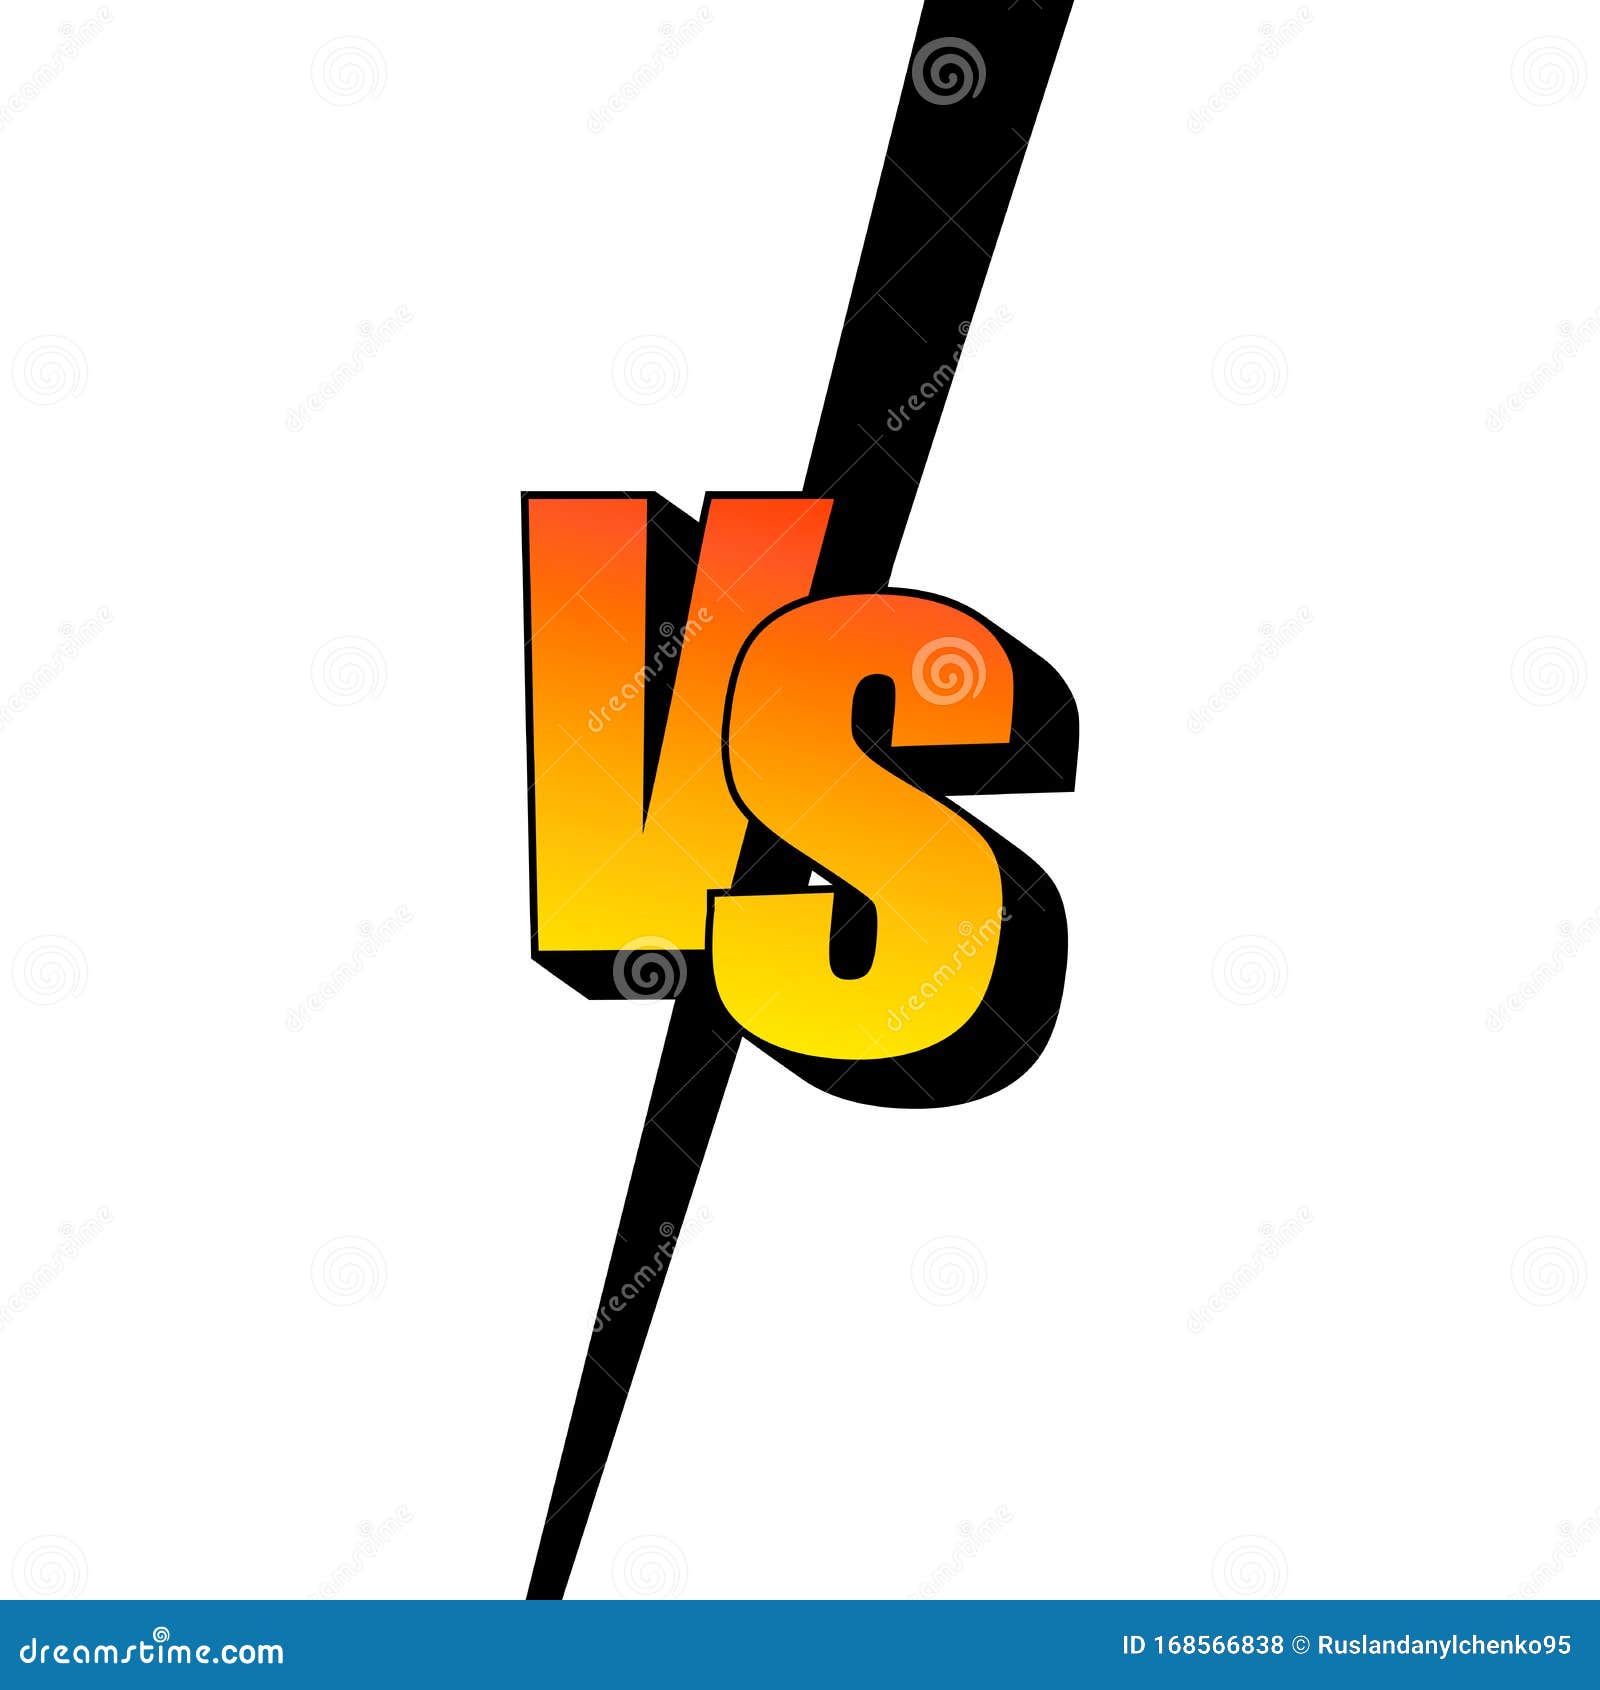 Versus Clipart Transparent Background, Versus Battle Blue Team And Red  Transparant Background Template, Versus, Vs, Battle PNG Image For Free  Download